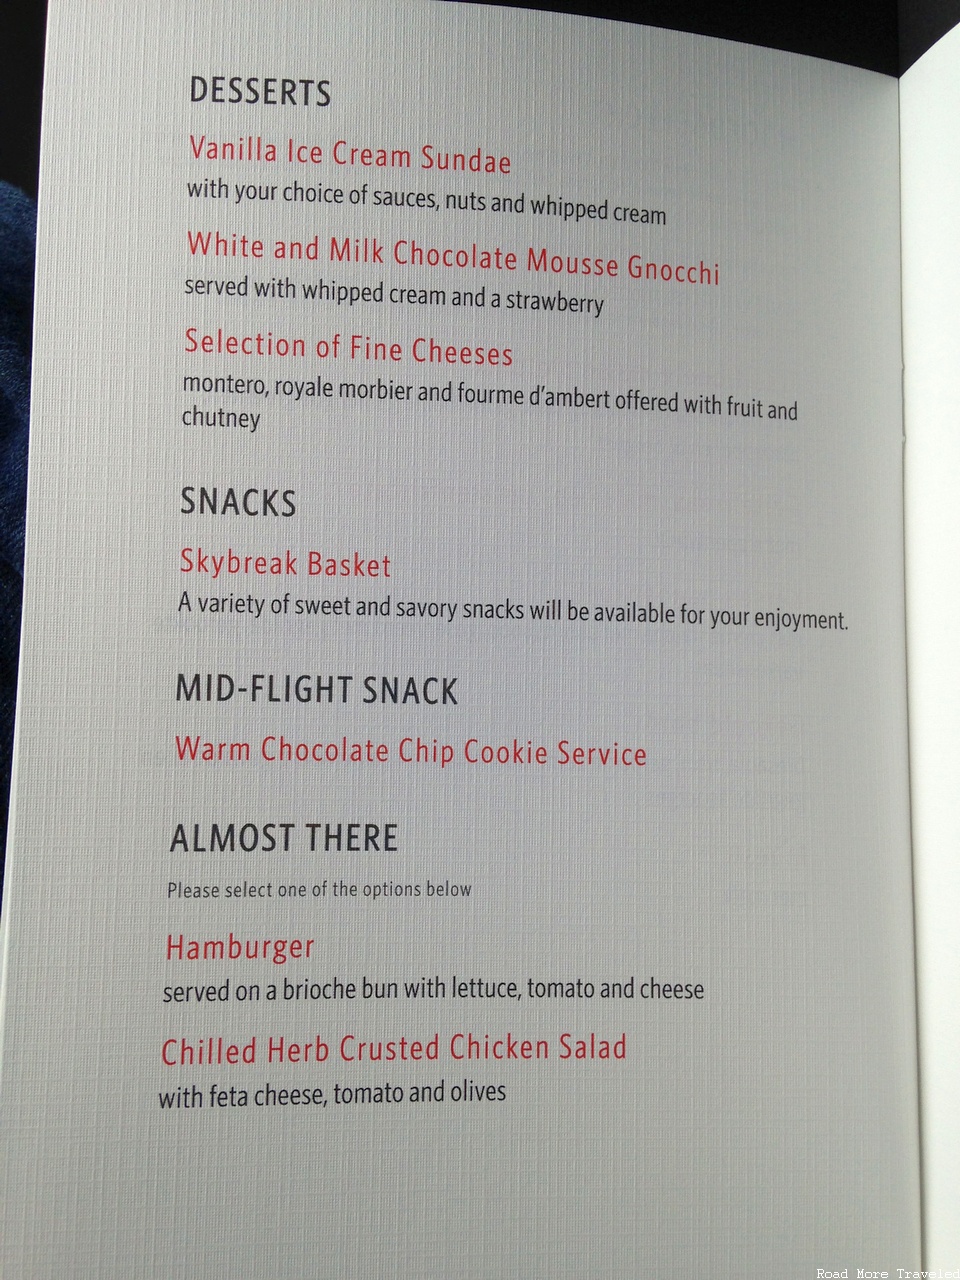 Delta One A350 menu - deserts/snacks/pre-landing meal